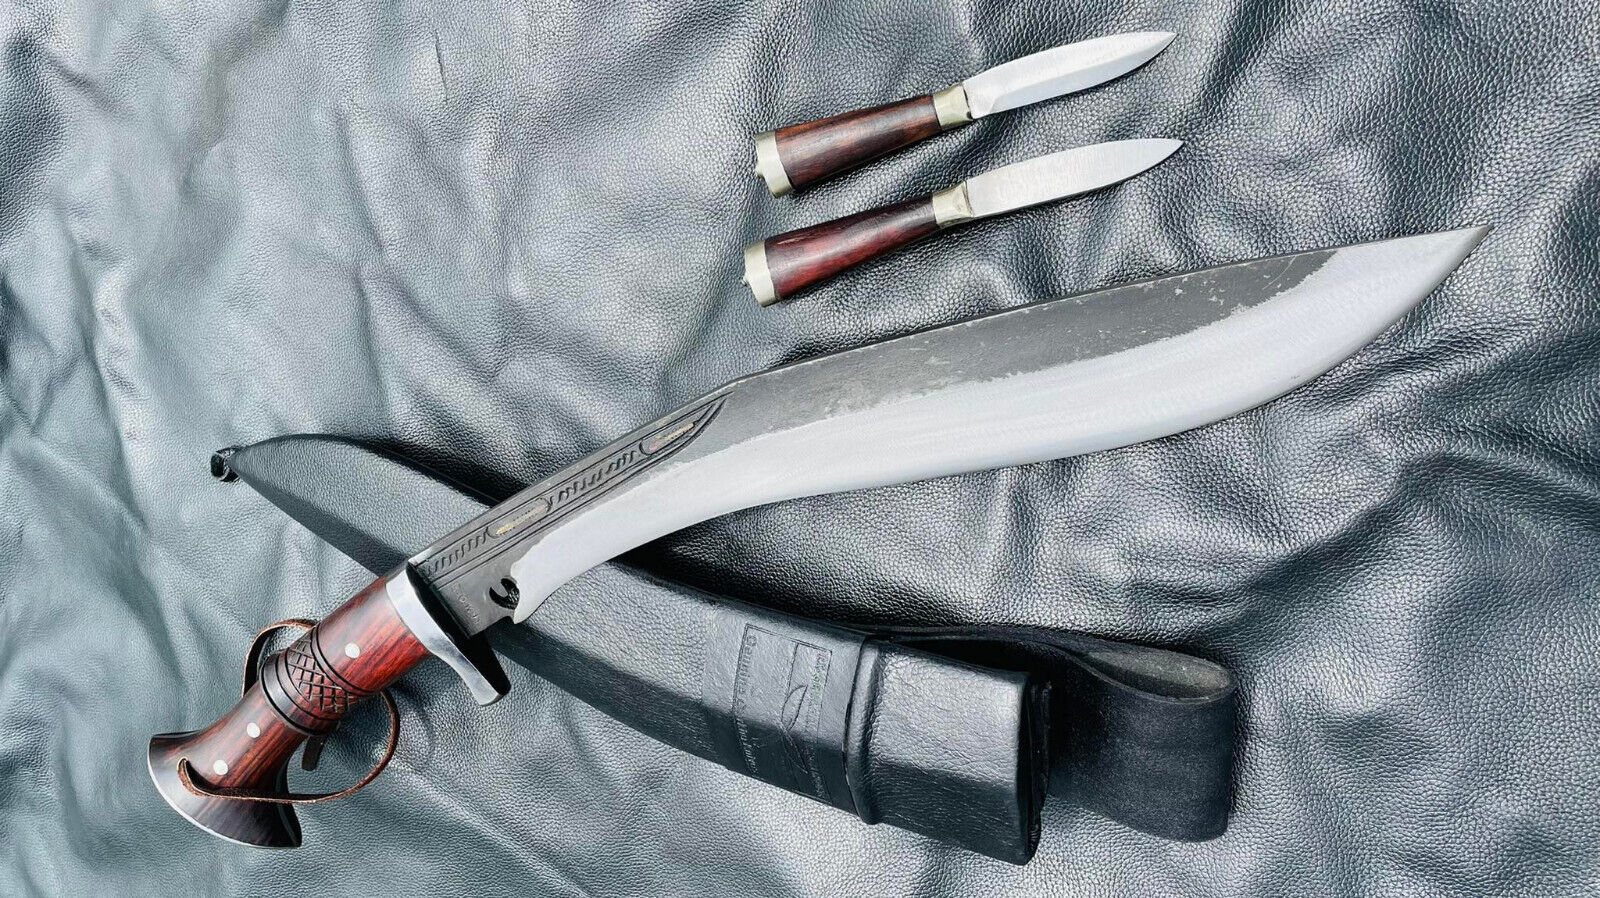 EGKH-15 inches Blade Cheetlange Working kukri-hand forged Real working khukuri